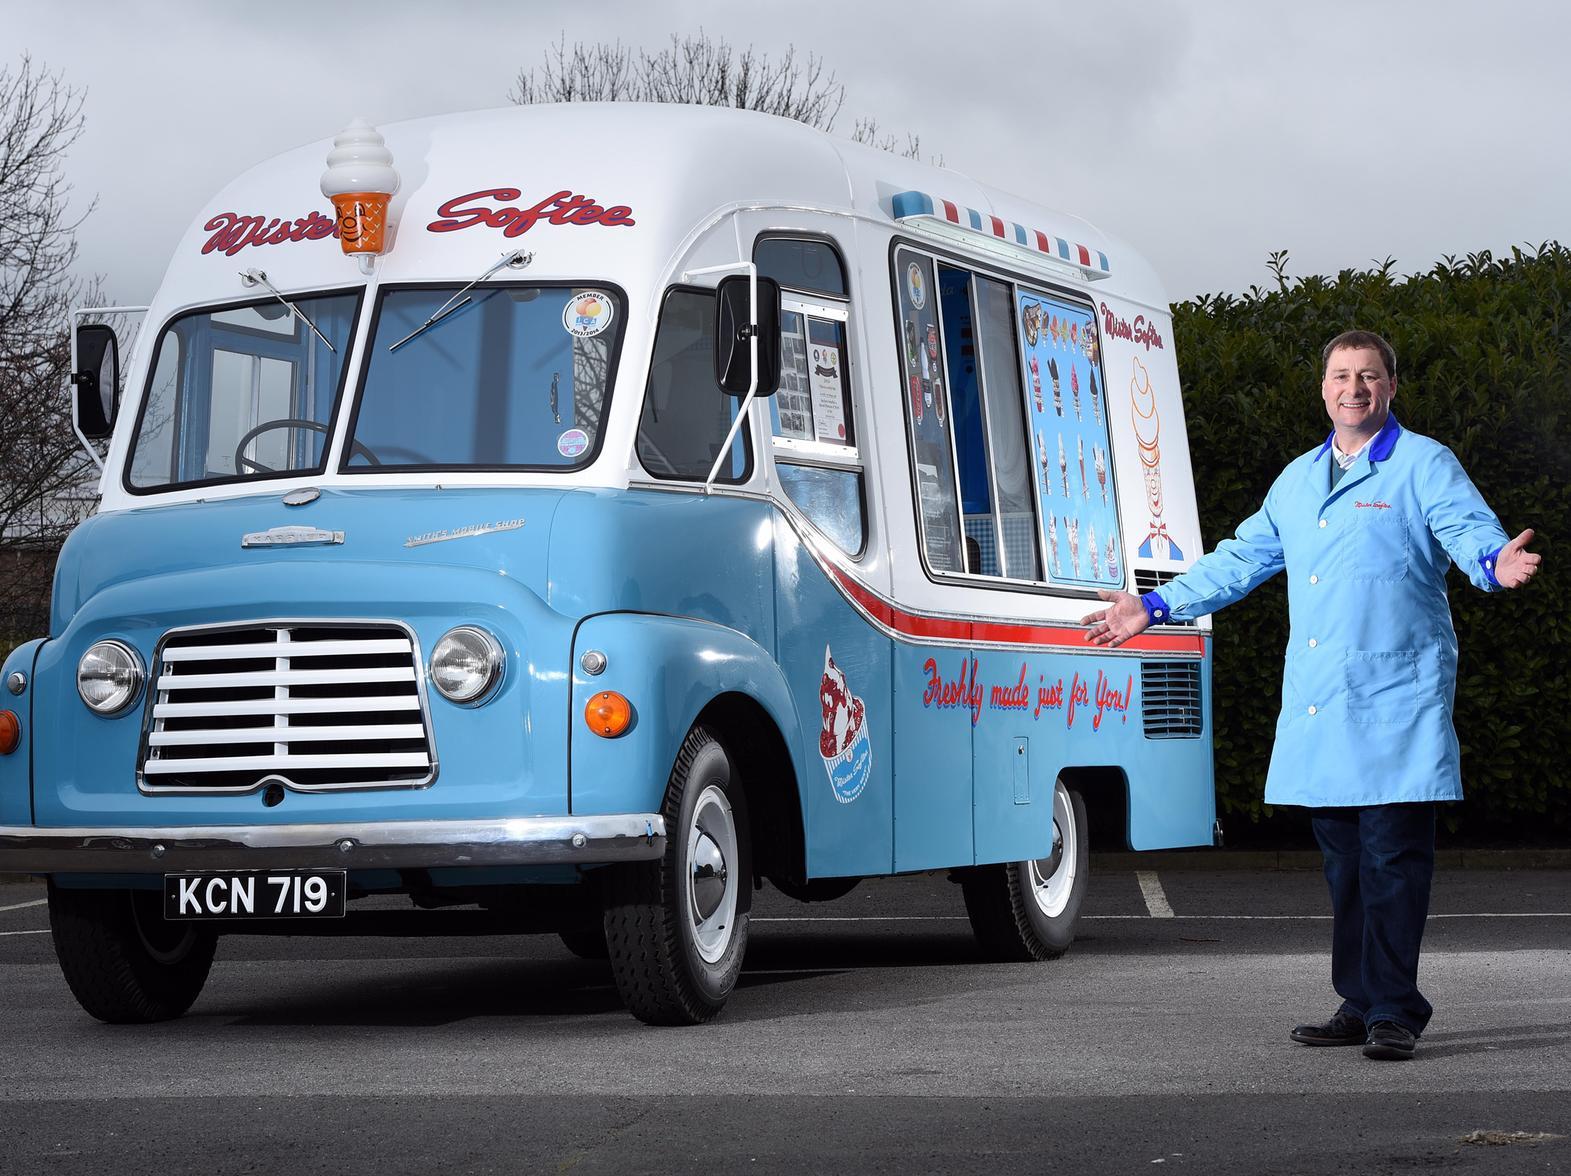 Ian Smith with one of his vintage ice cream vans